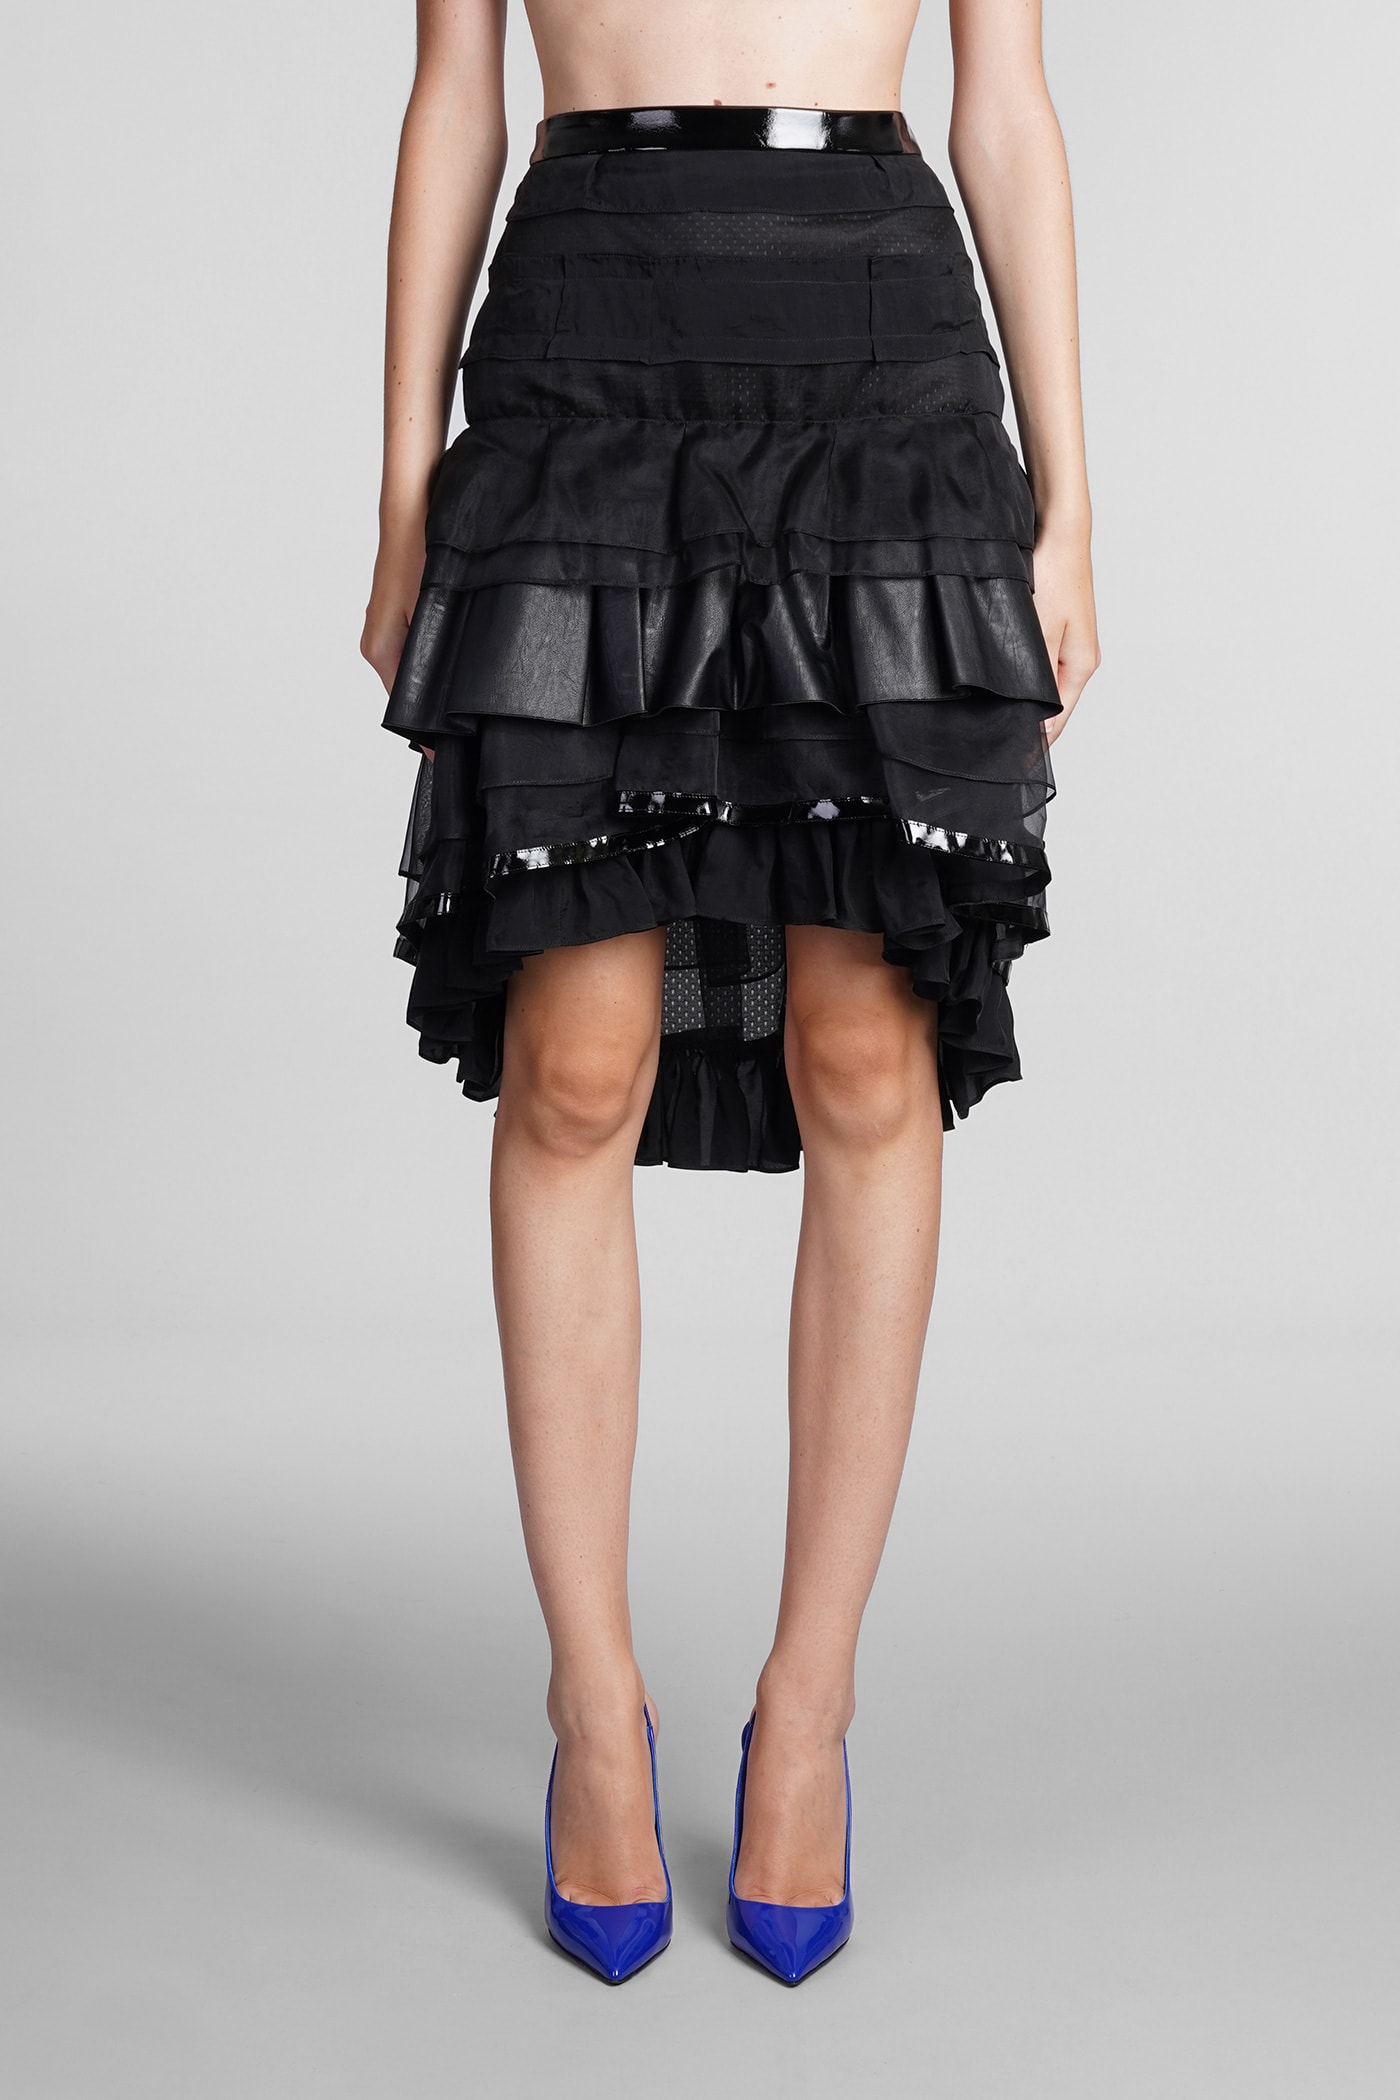 Koché Skirt In Black Silk